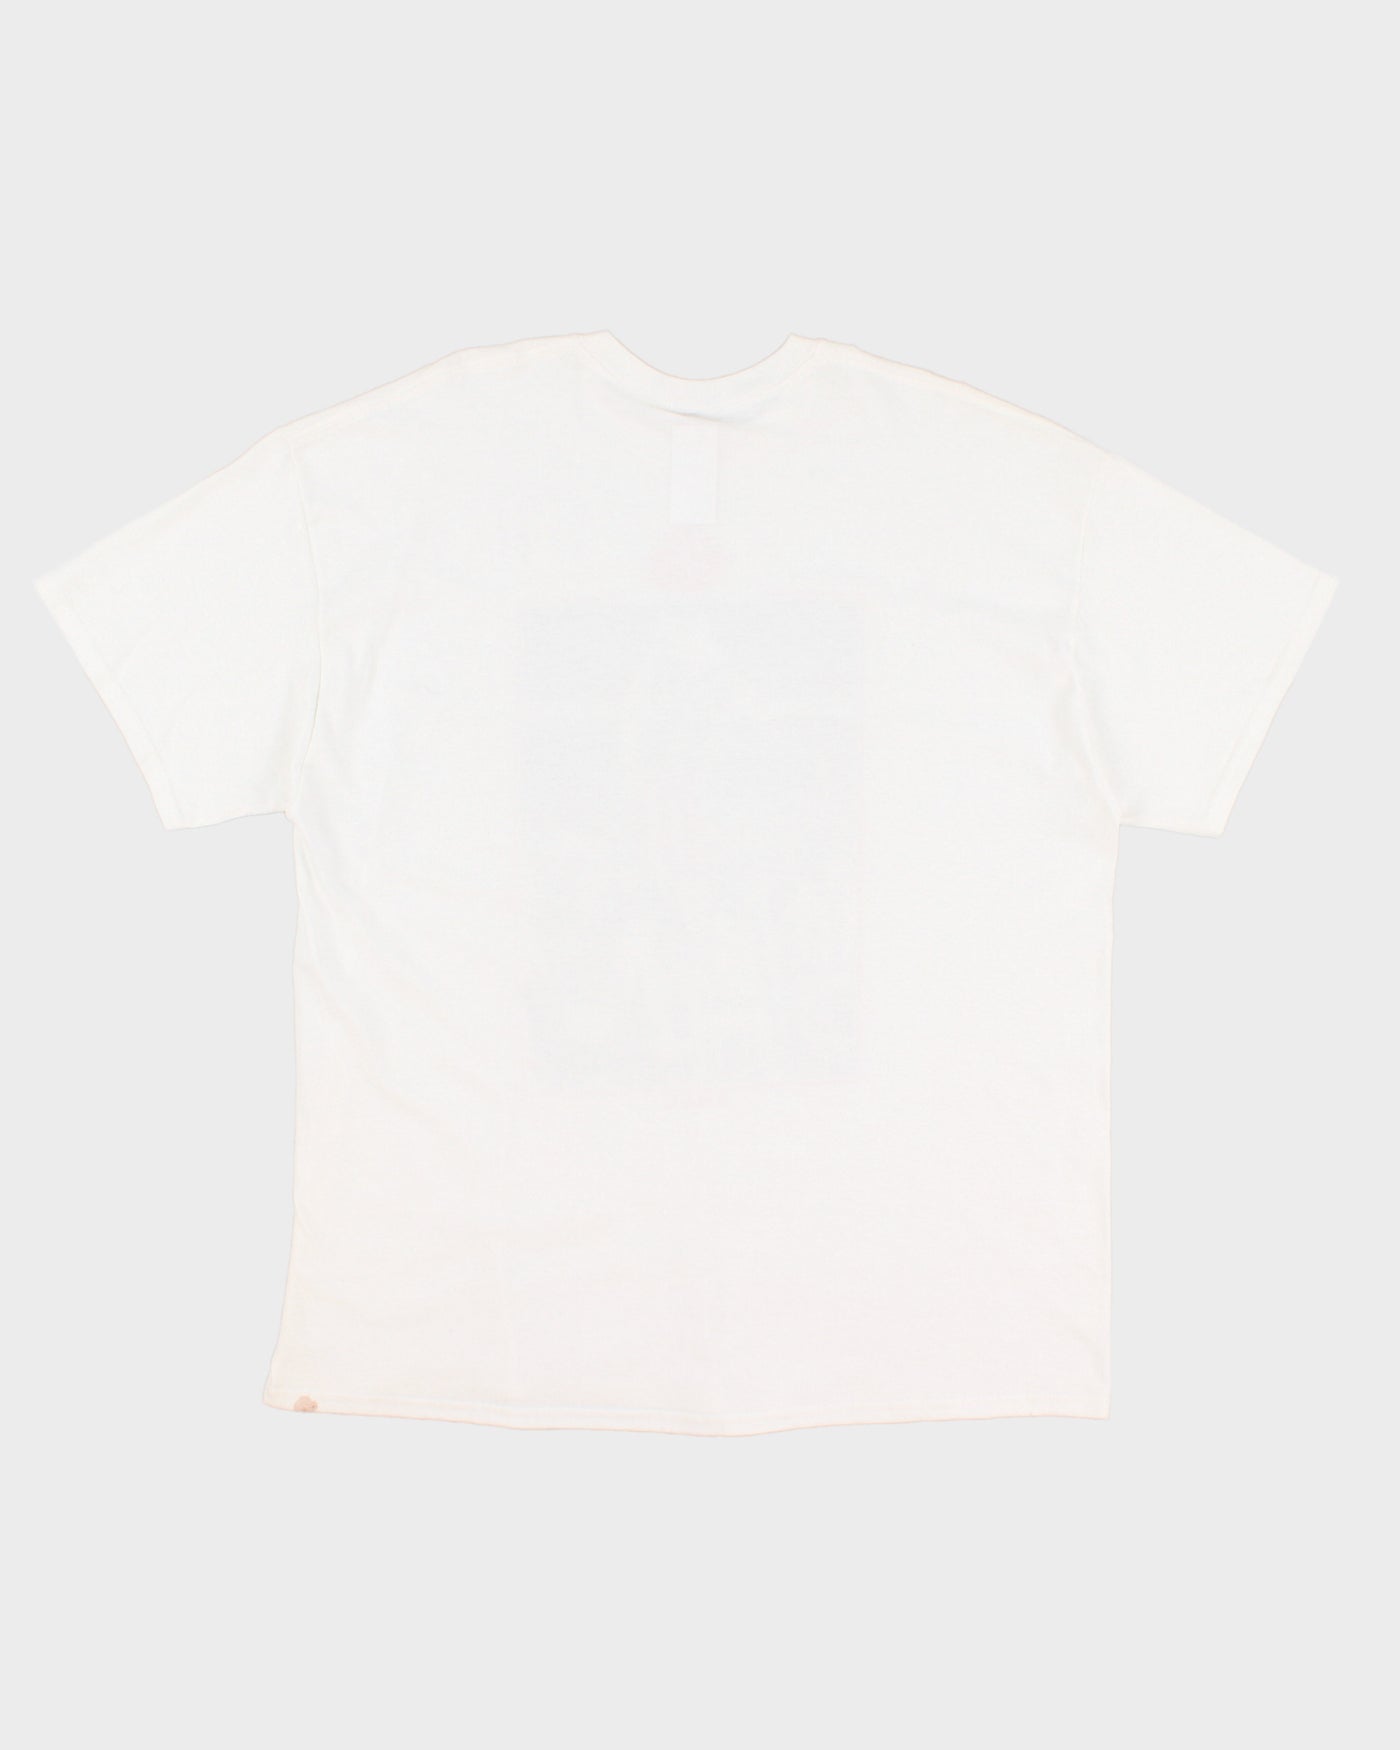 Sunderland AFC White T-Shirt - 2XL